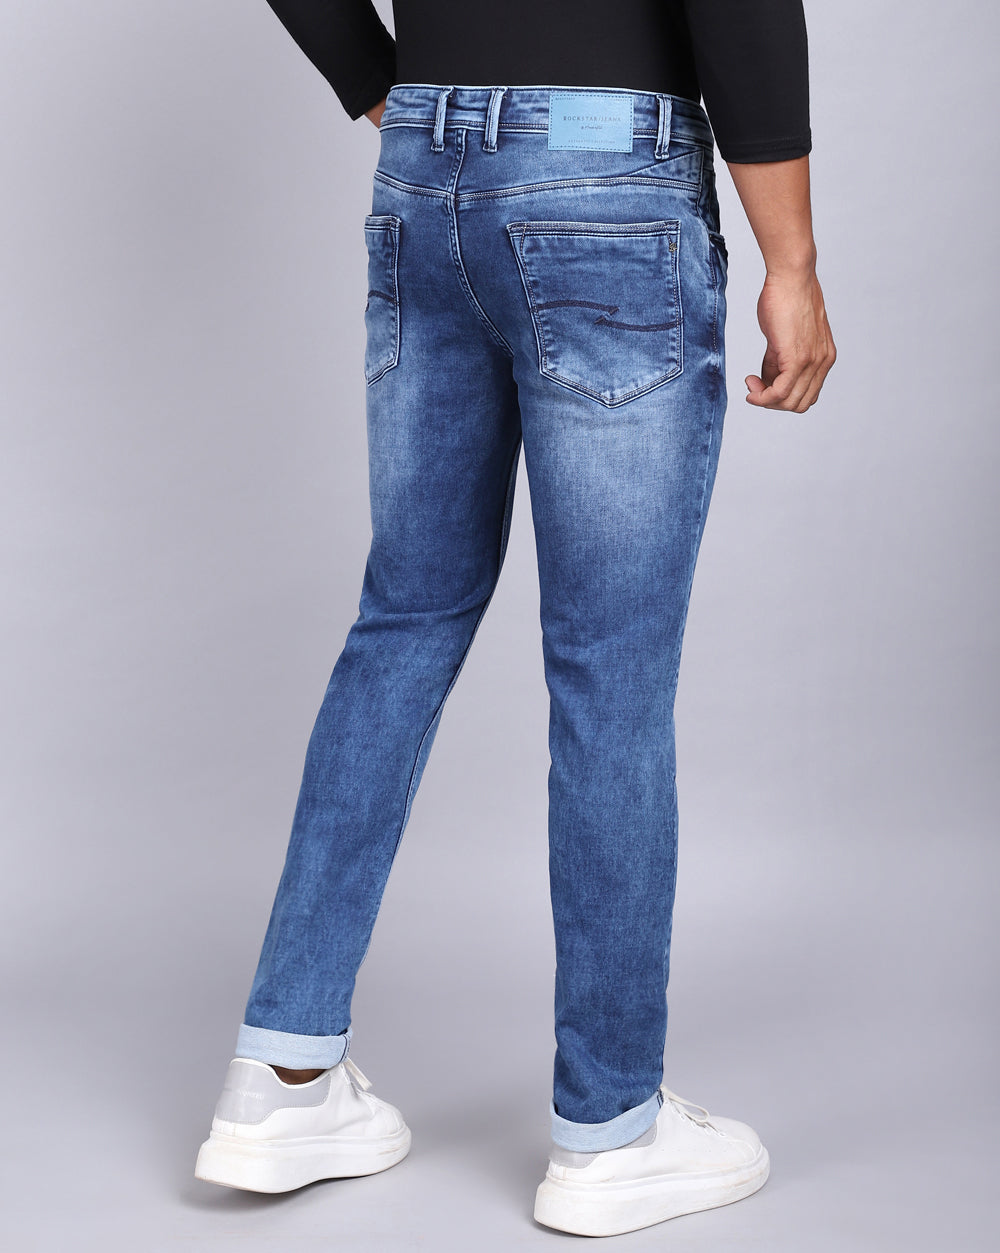 Super Slim Fit Jeans-Faded Light Blue